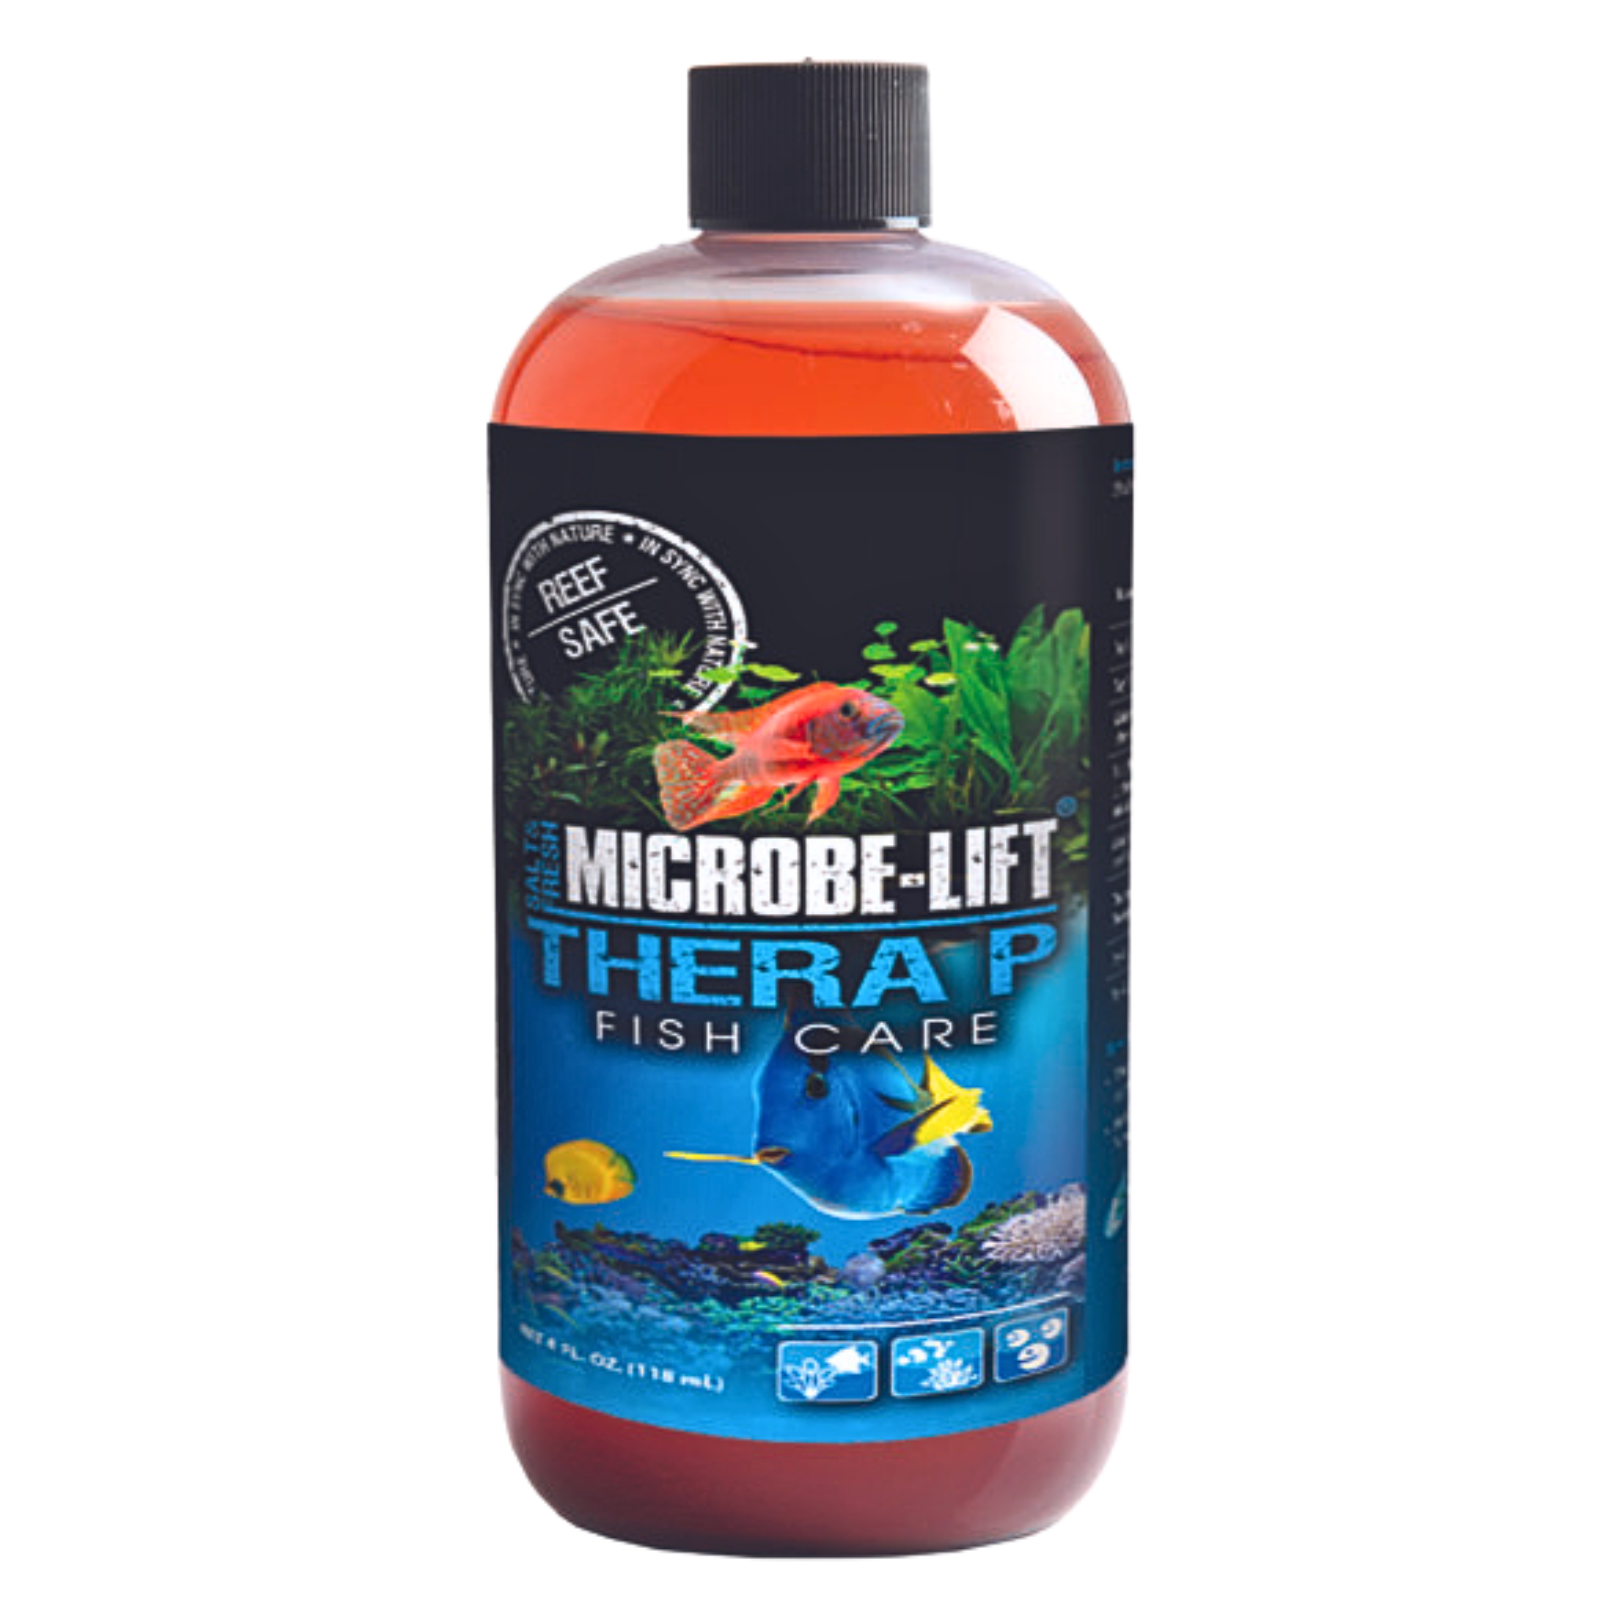 Microbe-Lift TheraP